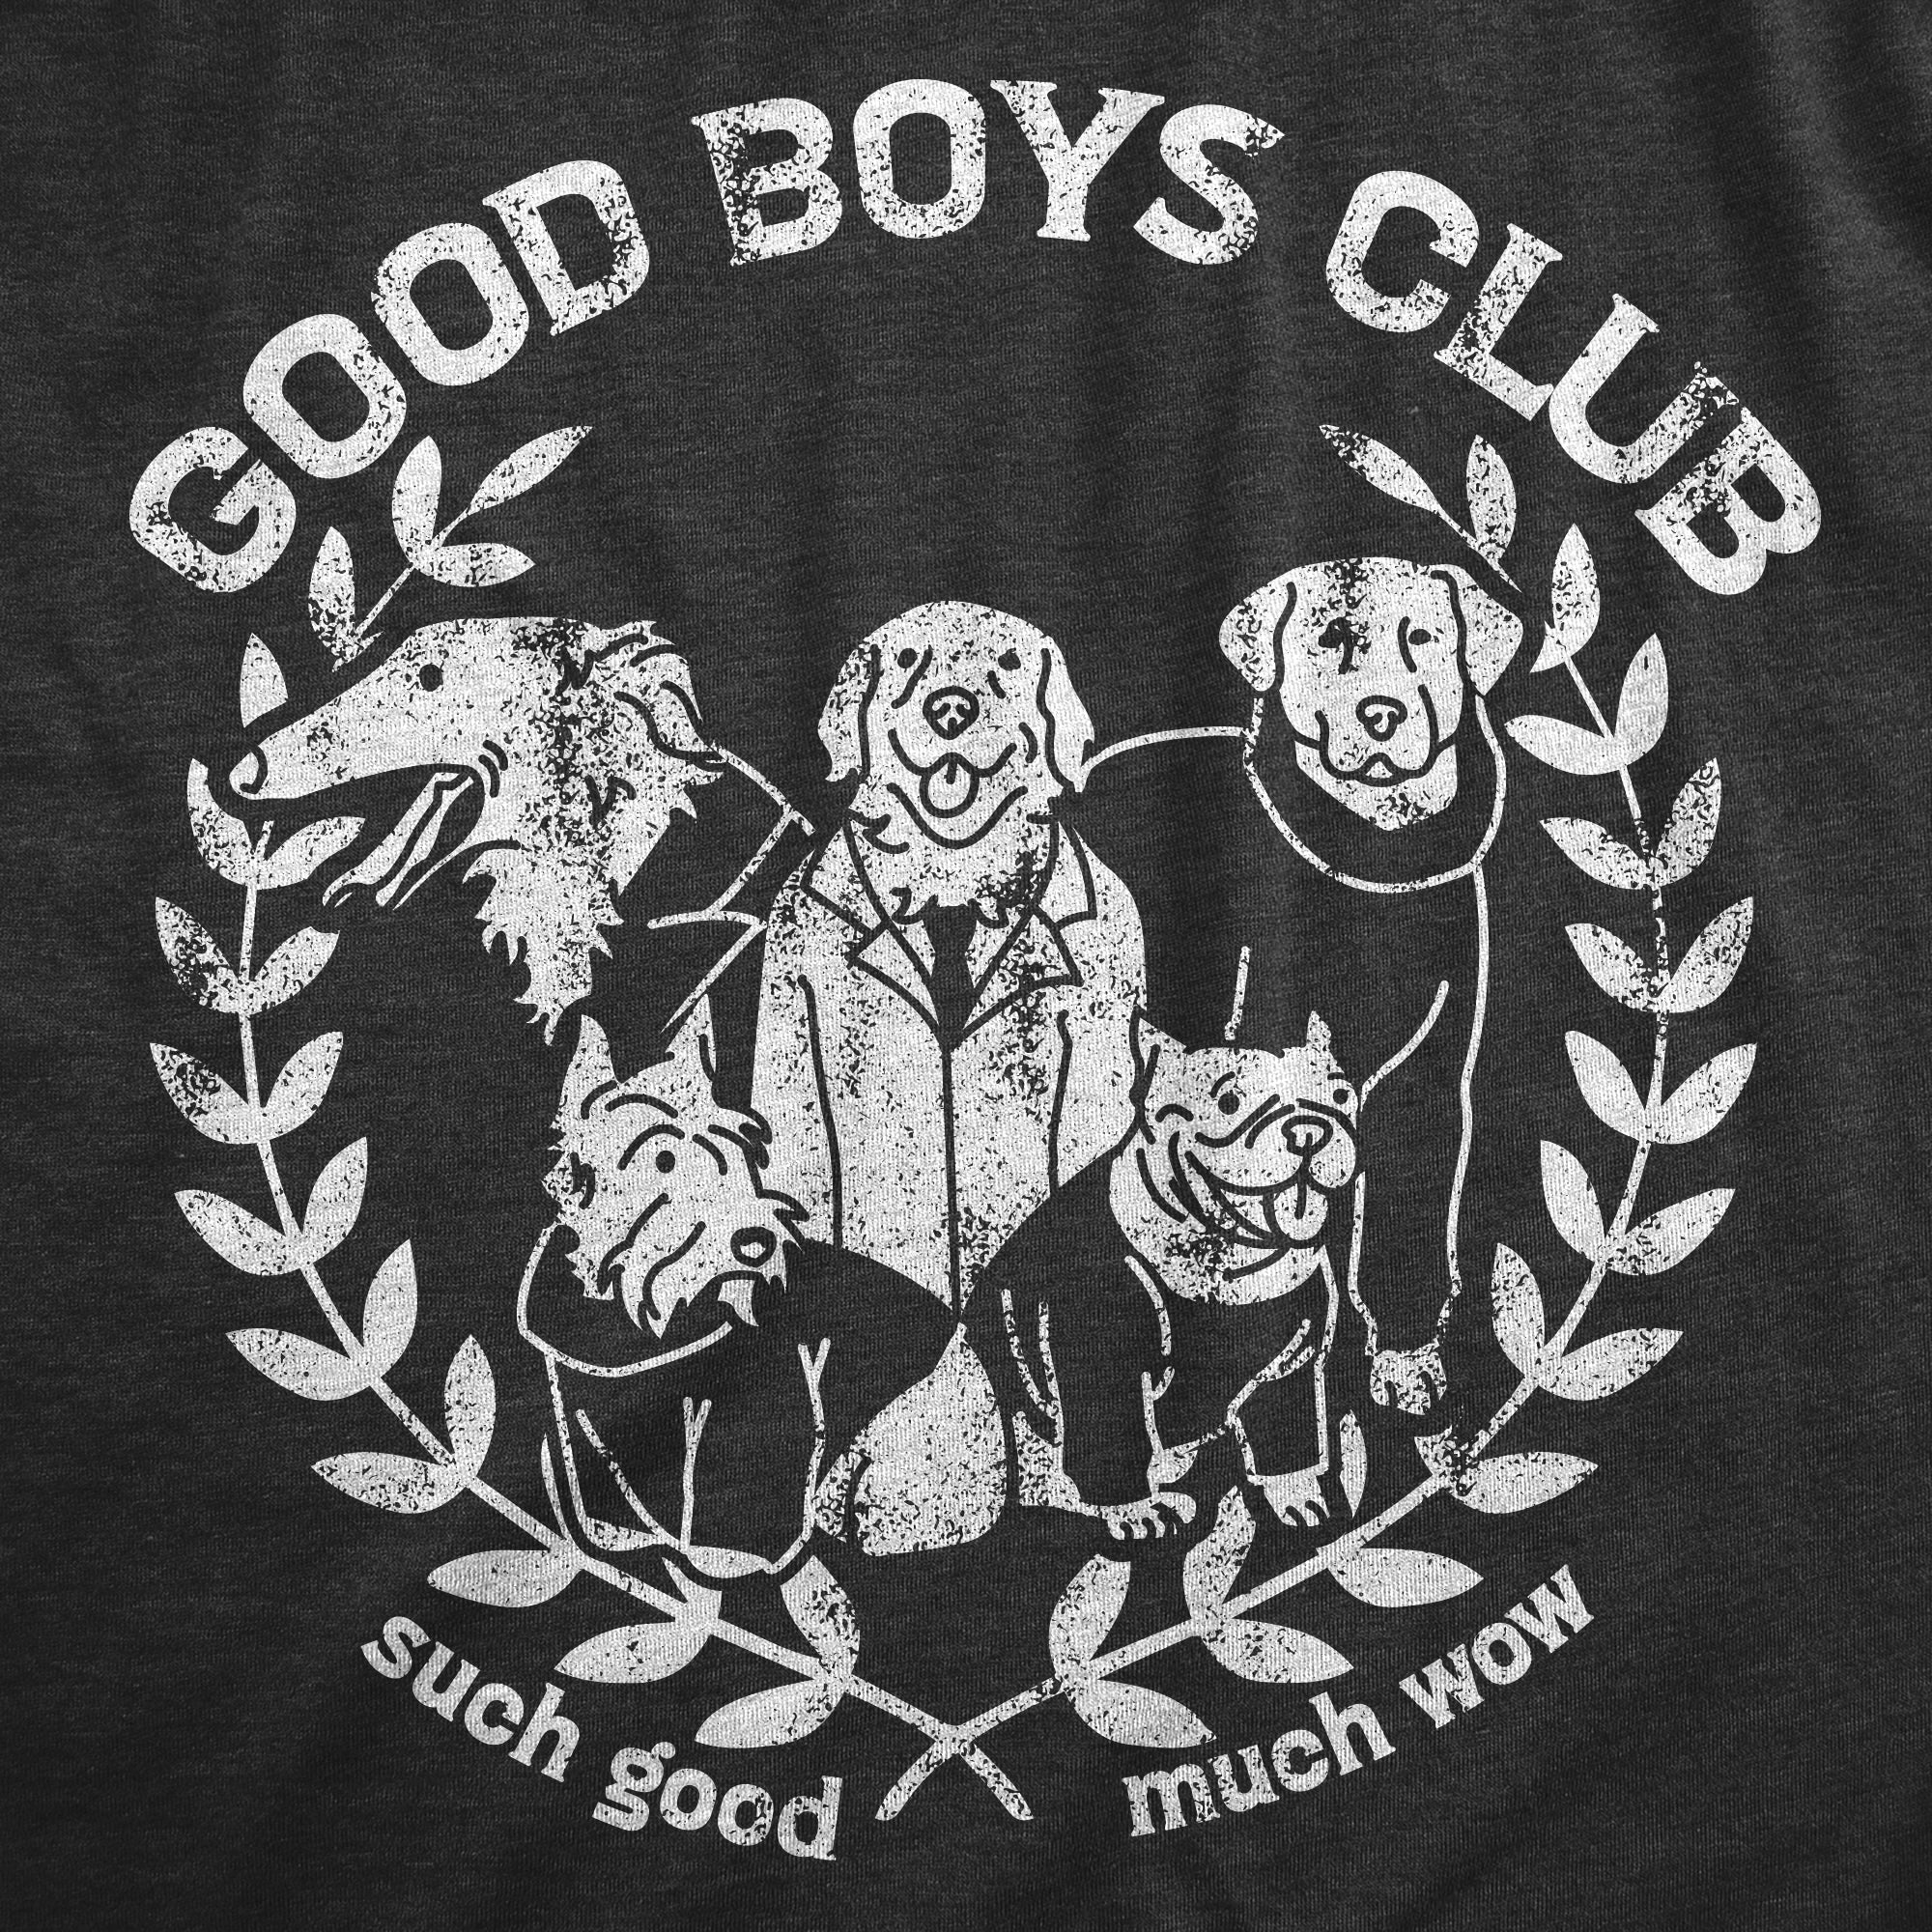 Funny Heather Black - GOODBOYS Good Boys Club Mens T Shirt Nerdy Dog Tee